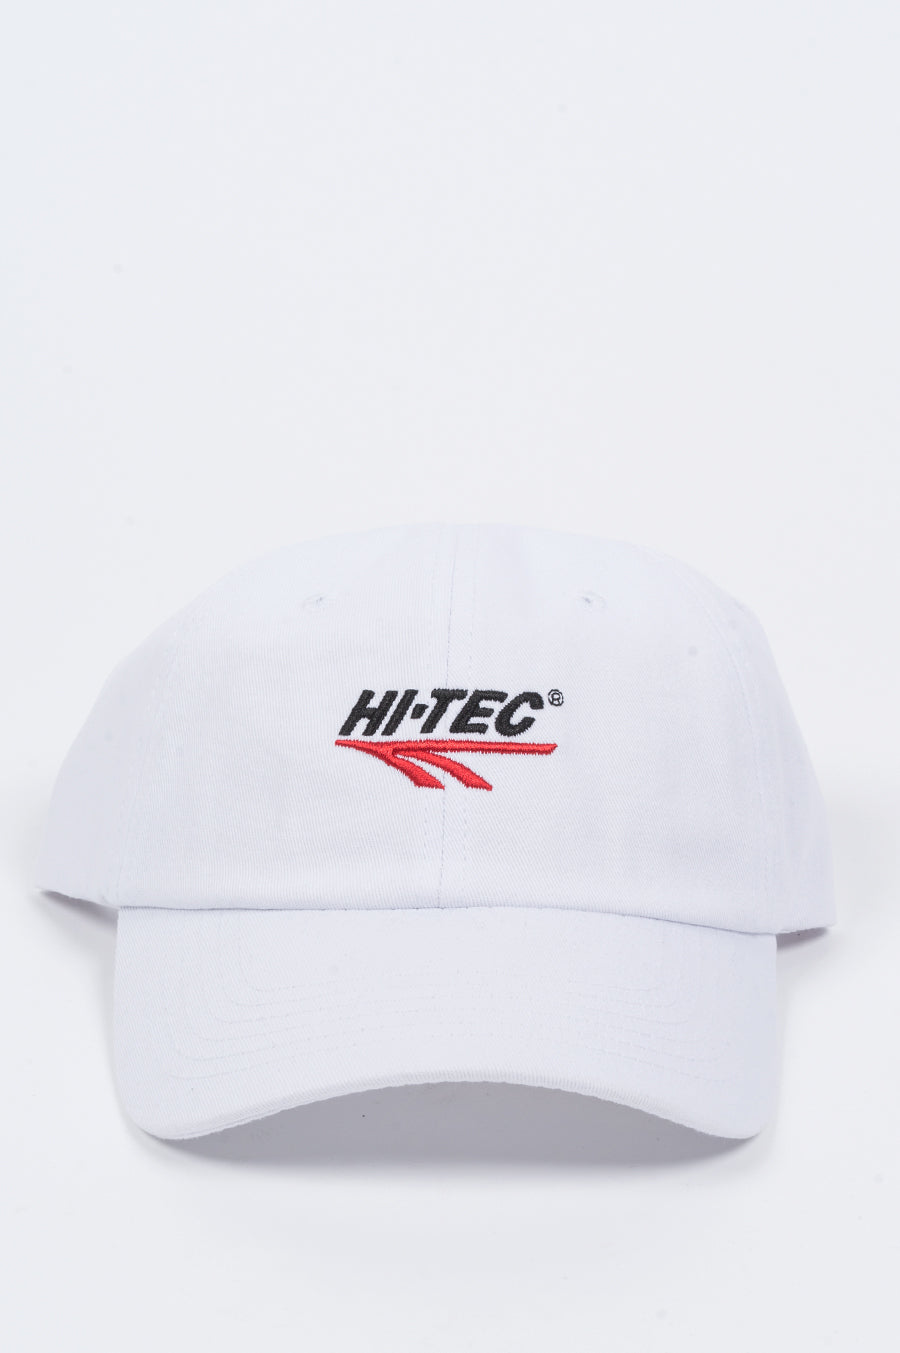 RASSVET X HI-TEC CAP WHITE - BLENDS